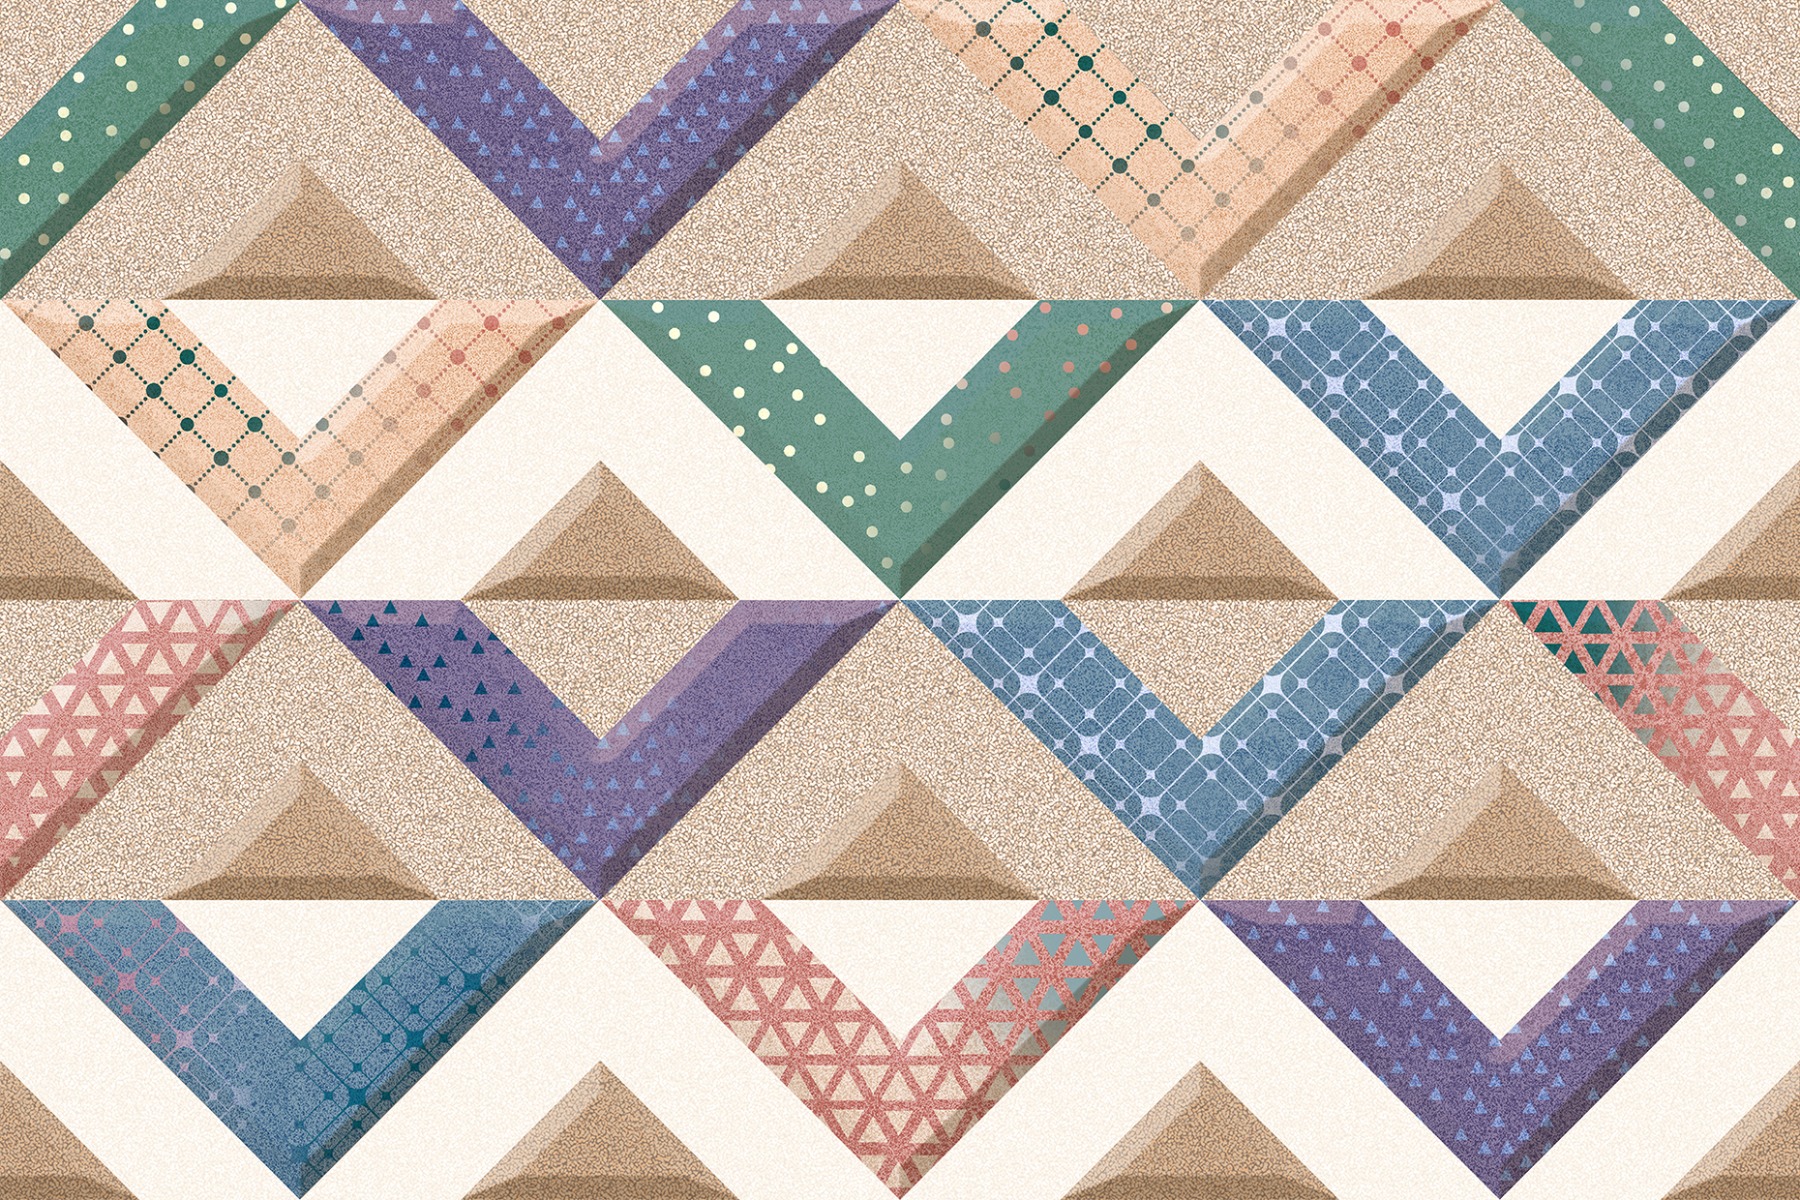 Chequered Tiles for Bathroom Tiles, Kitchen Tiles, Bedroom Tiles, Balcony Tiles